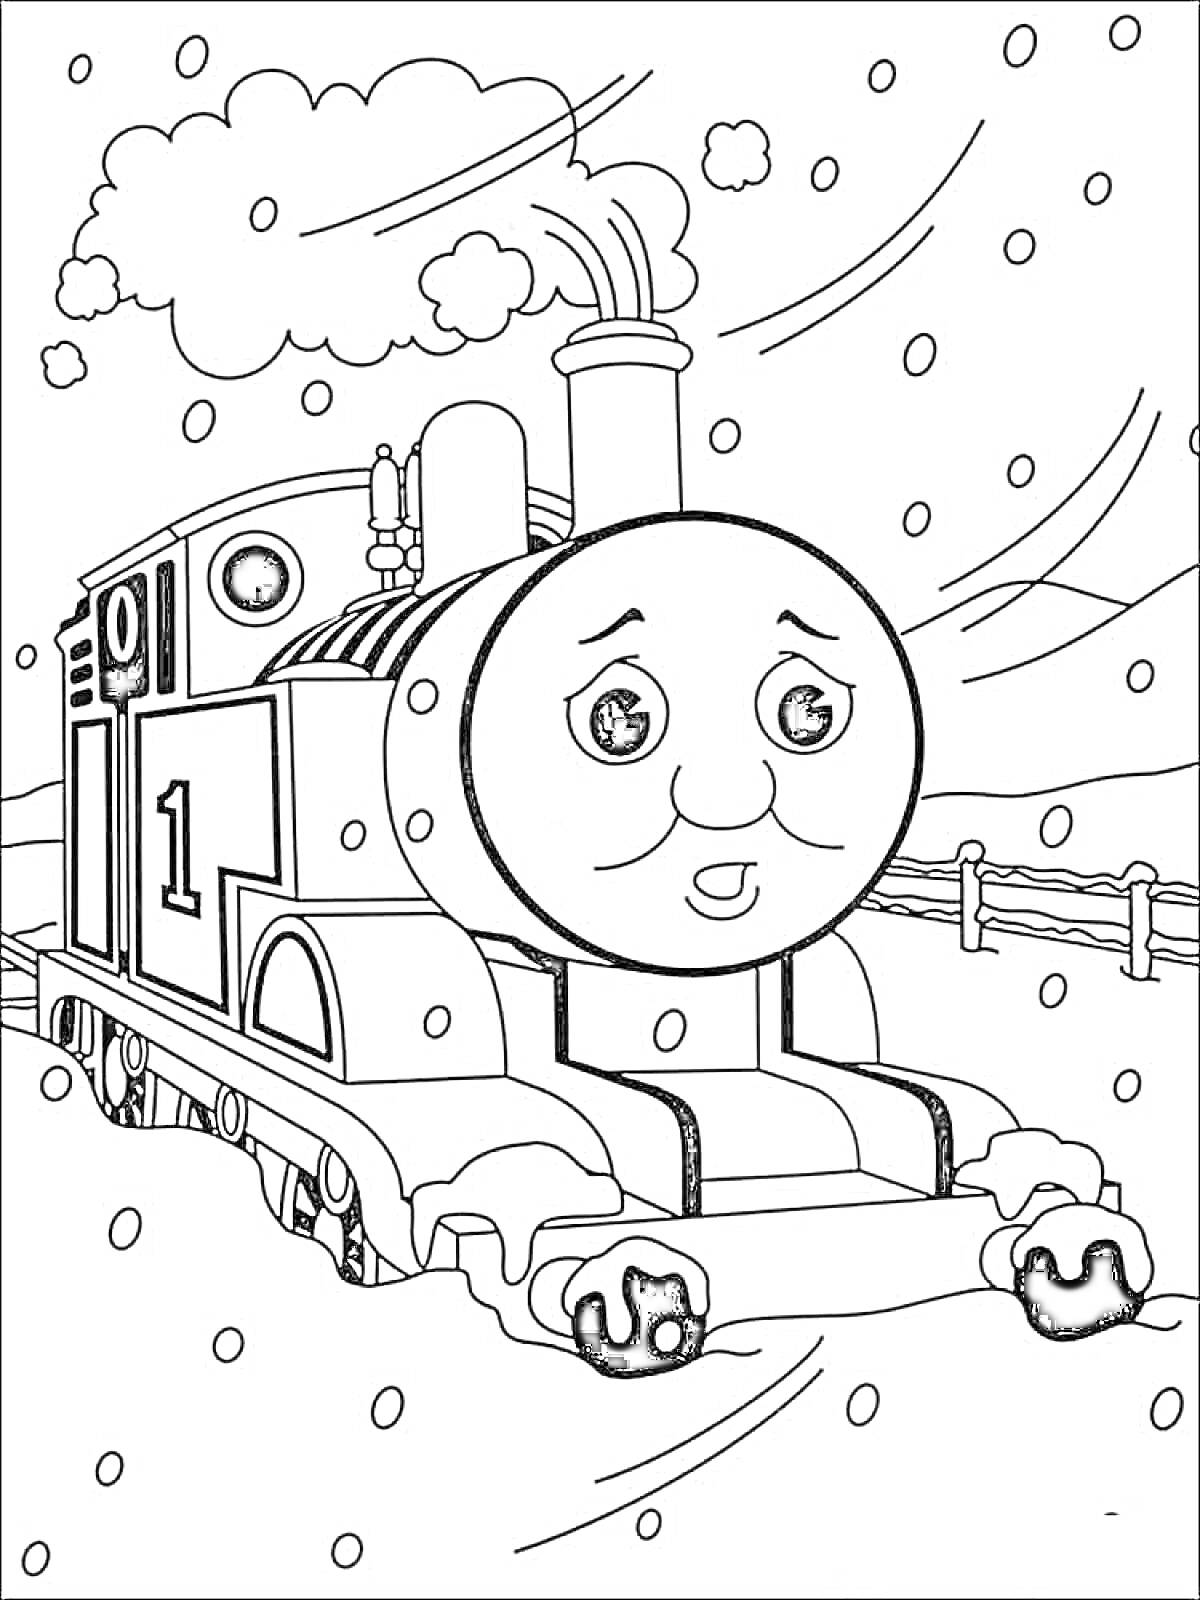 На раскраске изображено: Паровозик Томас, Зима, Снег, Пар, Облака, Забор, Детский персонаж